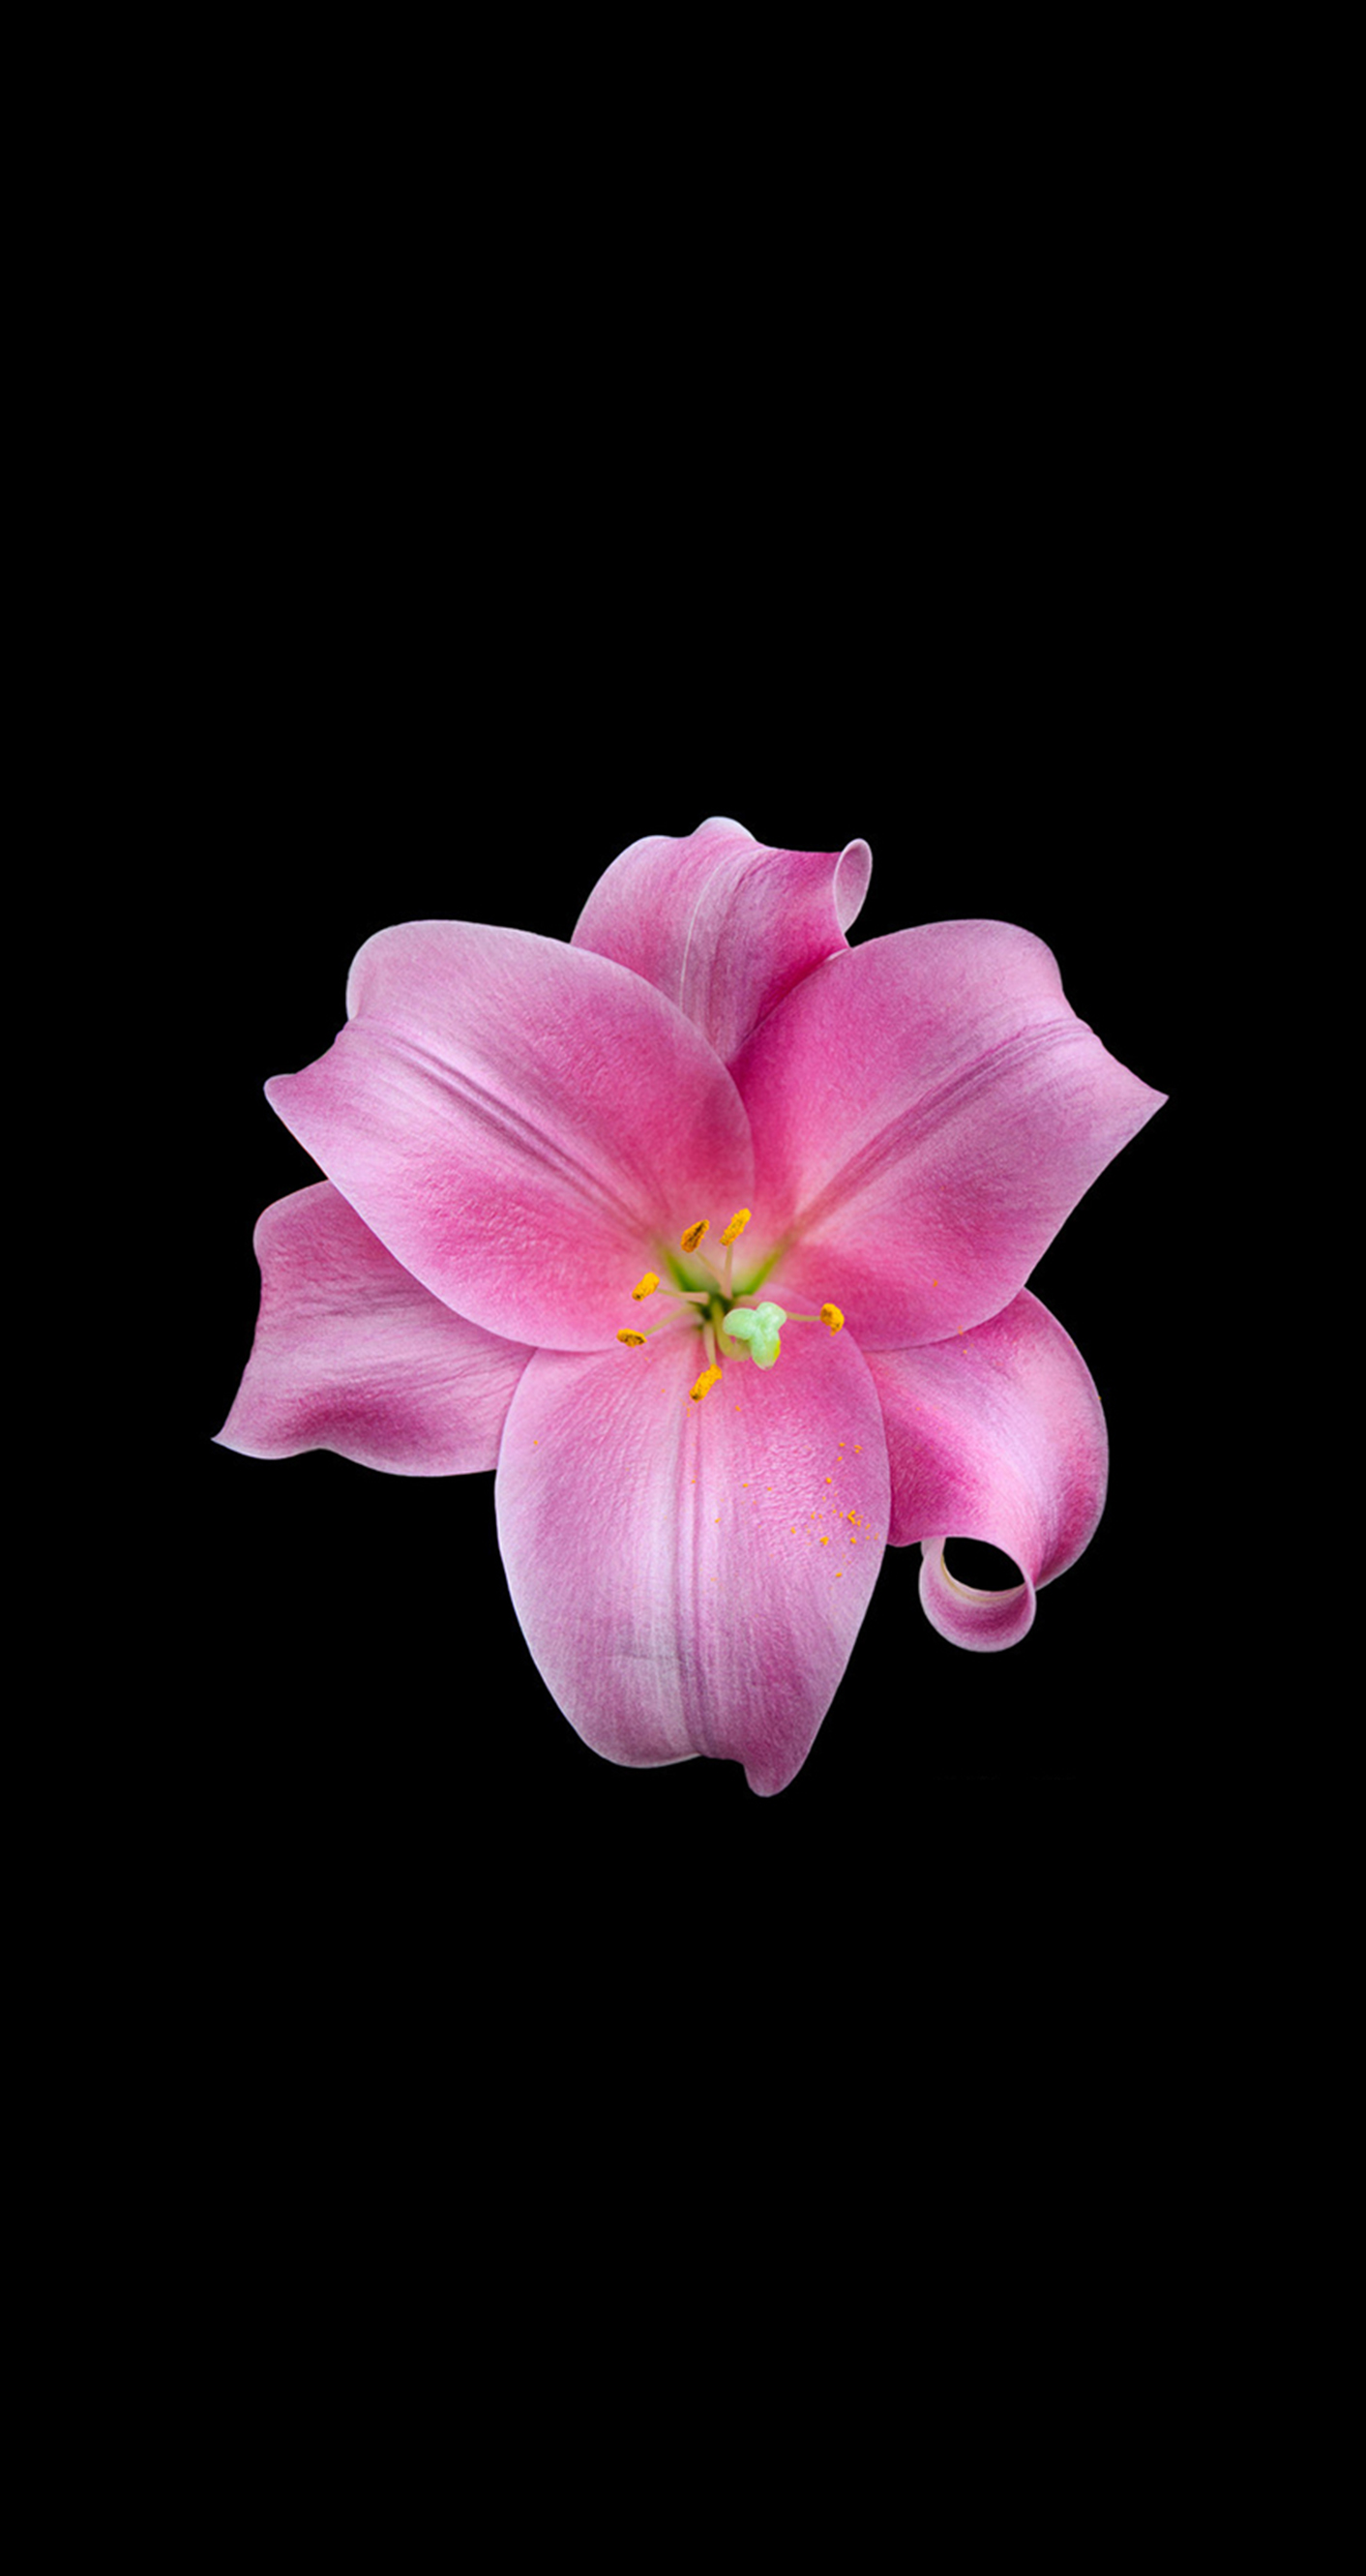 Flower iPhone Images Free Download | PixelsTalk.Net